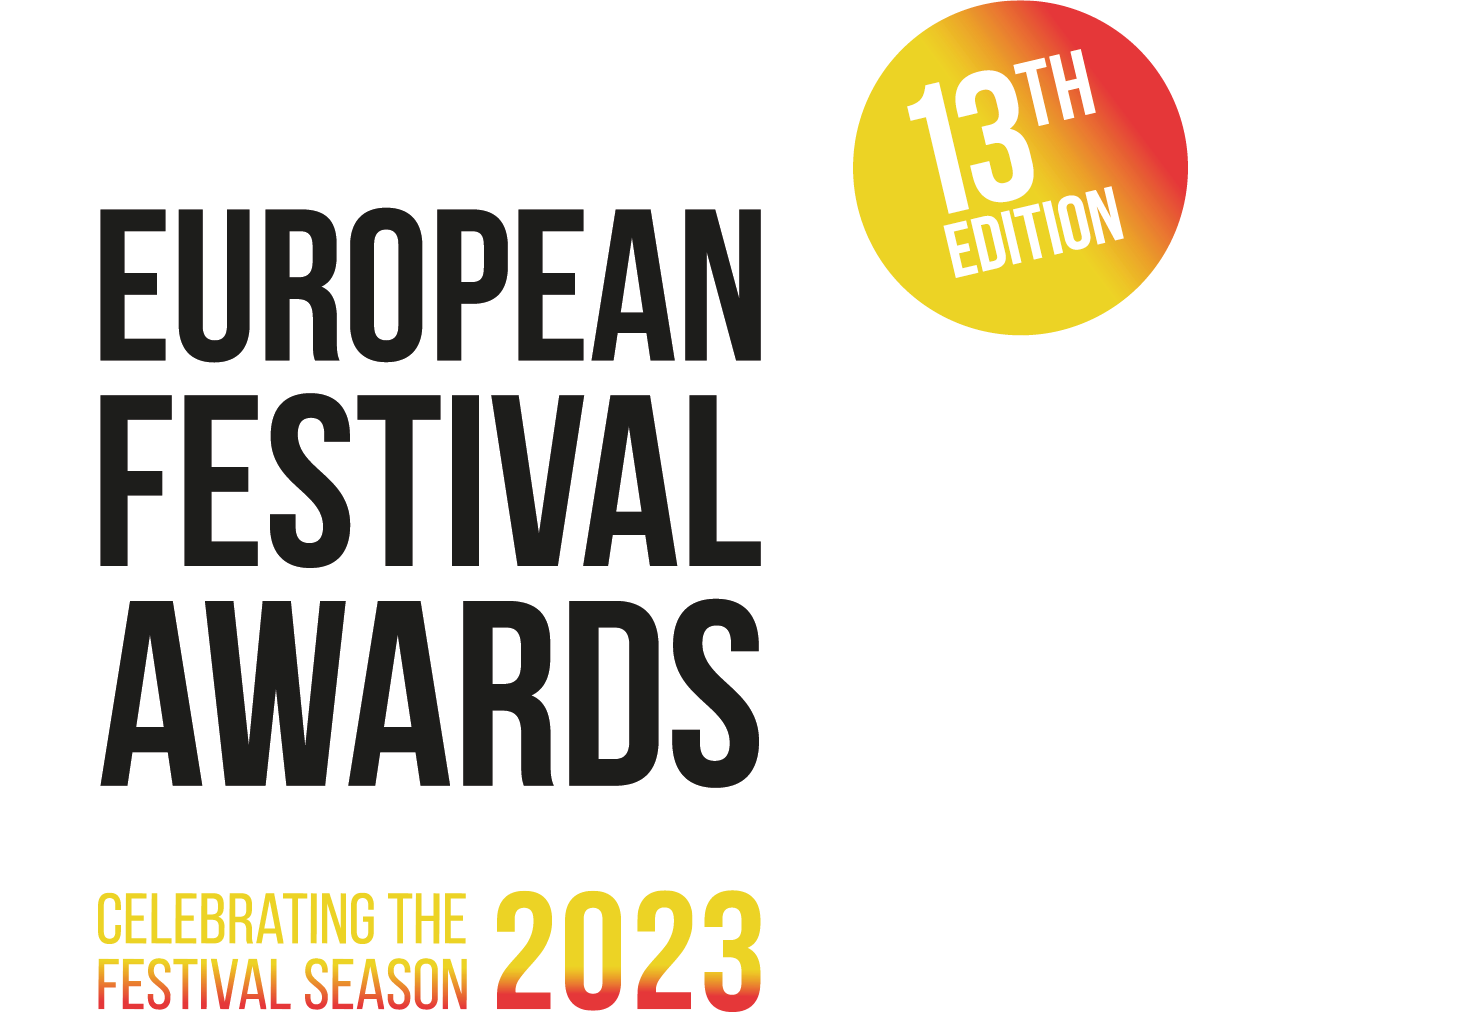 European festival awards logo